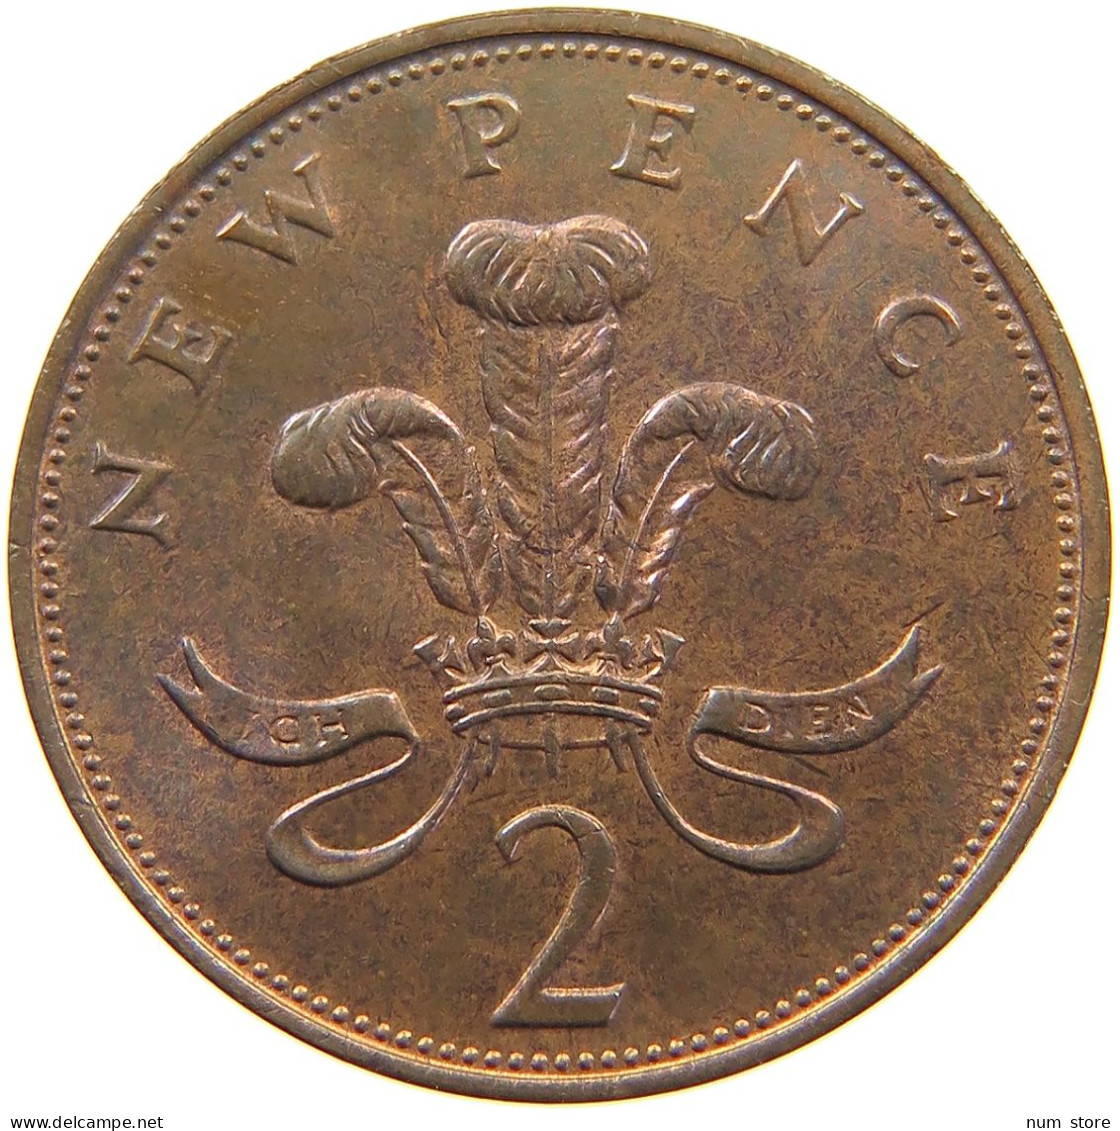 GREAT BRITAIN 2 PENCE 1971 Elisabeth II. (1952-) #s060 0743 - E. 2 Pence